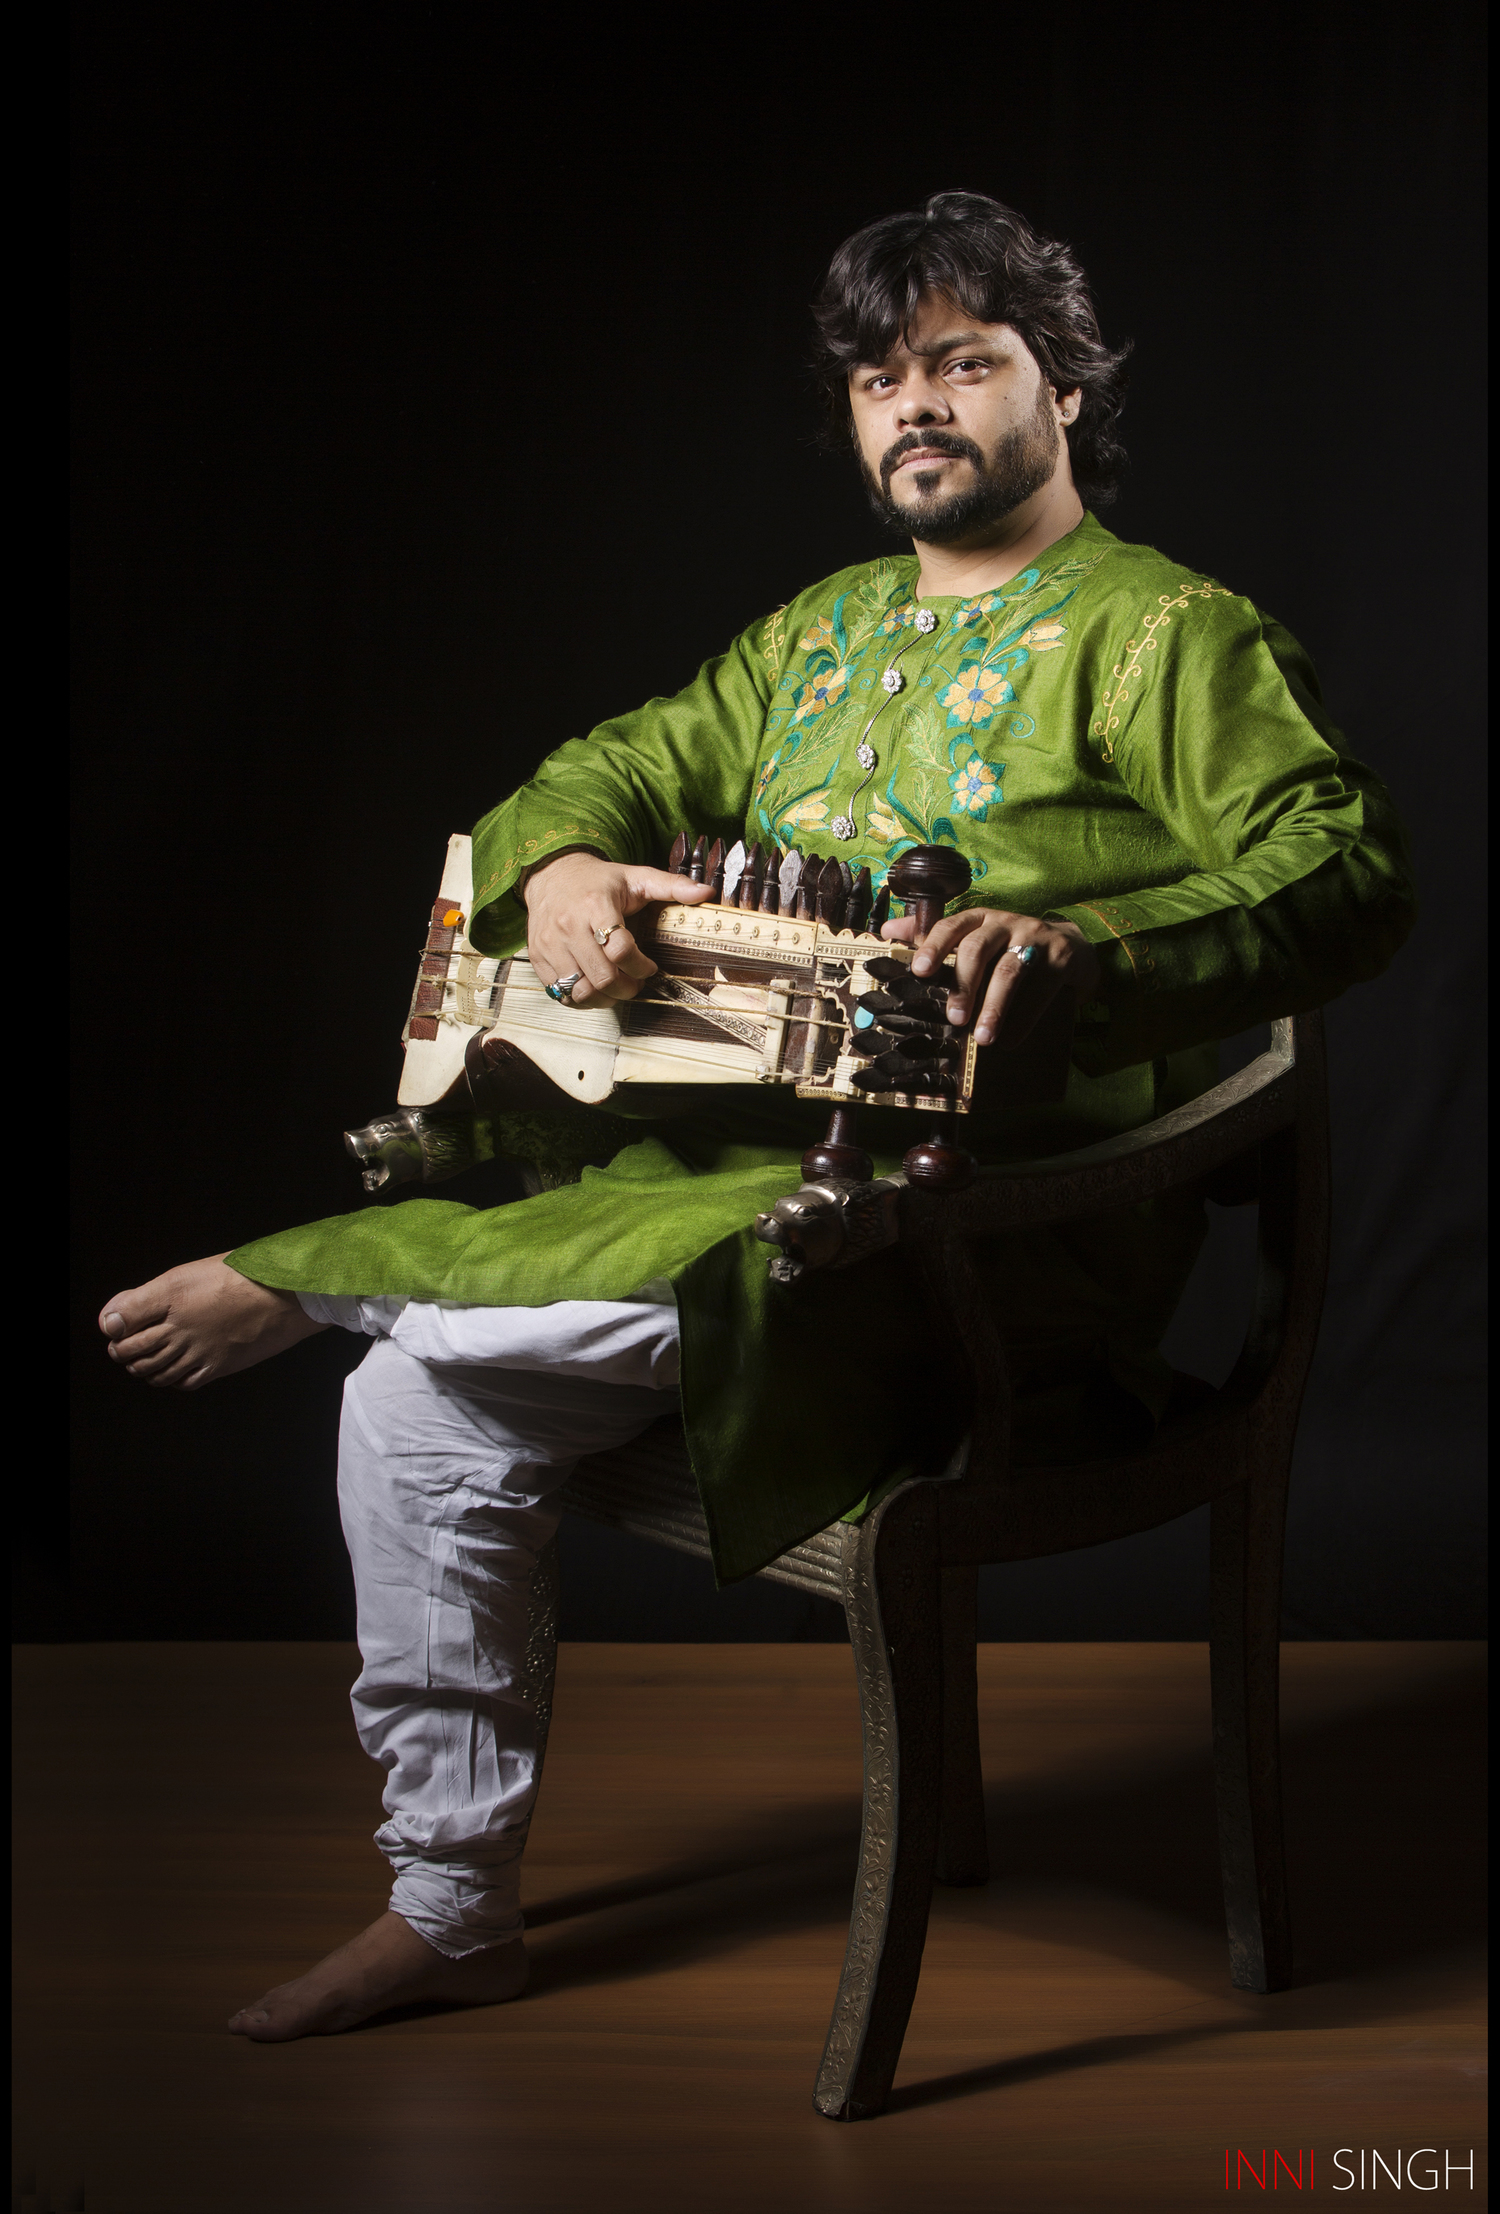 Interview: Sarangi Player Murad Ali Of Rebel Diwana Talks About Fusion Music 